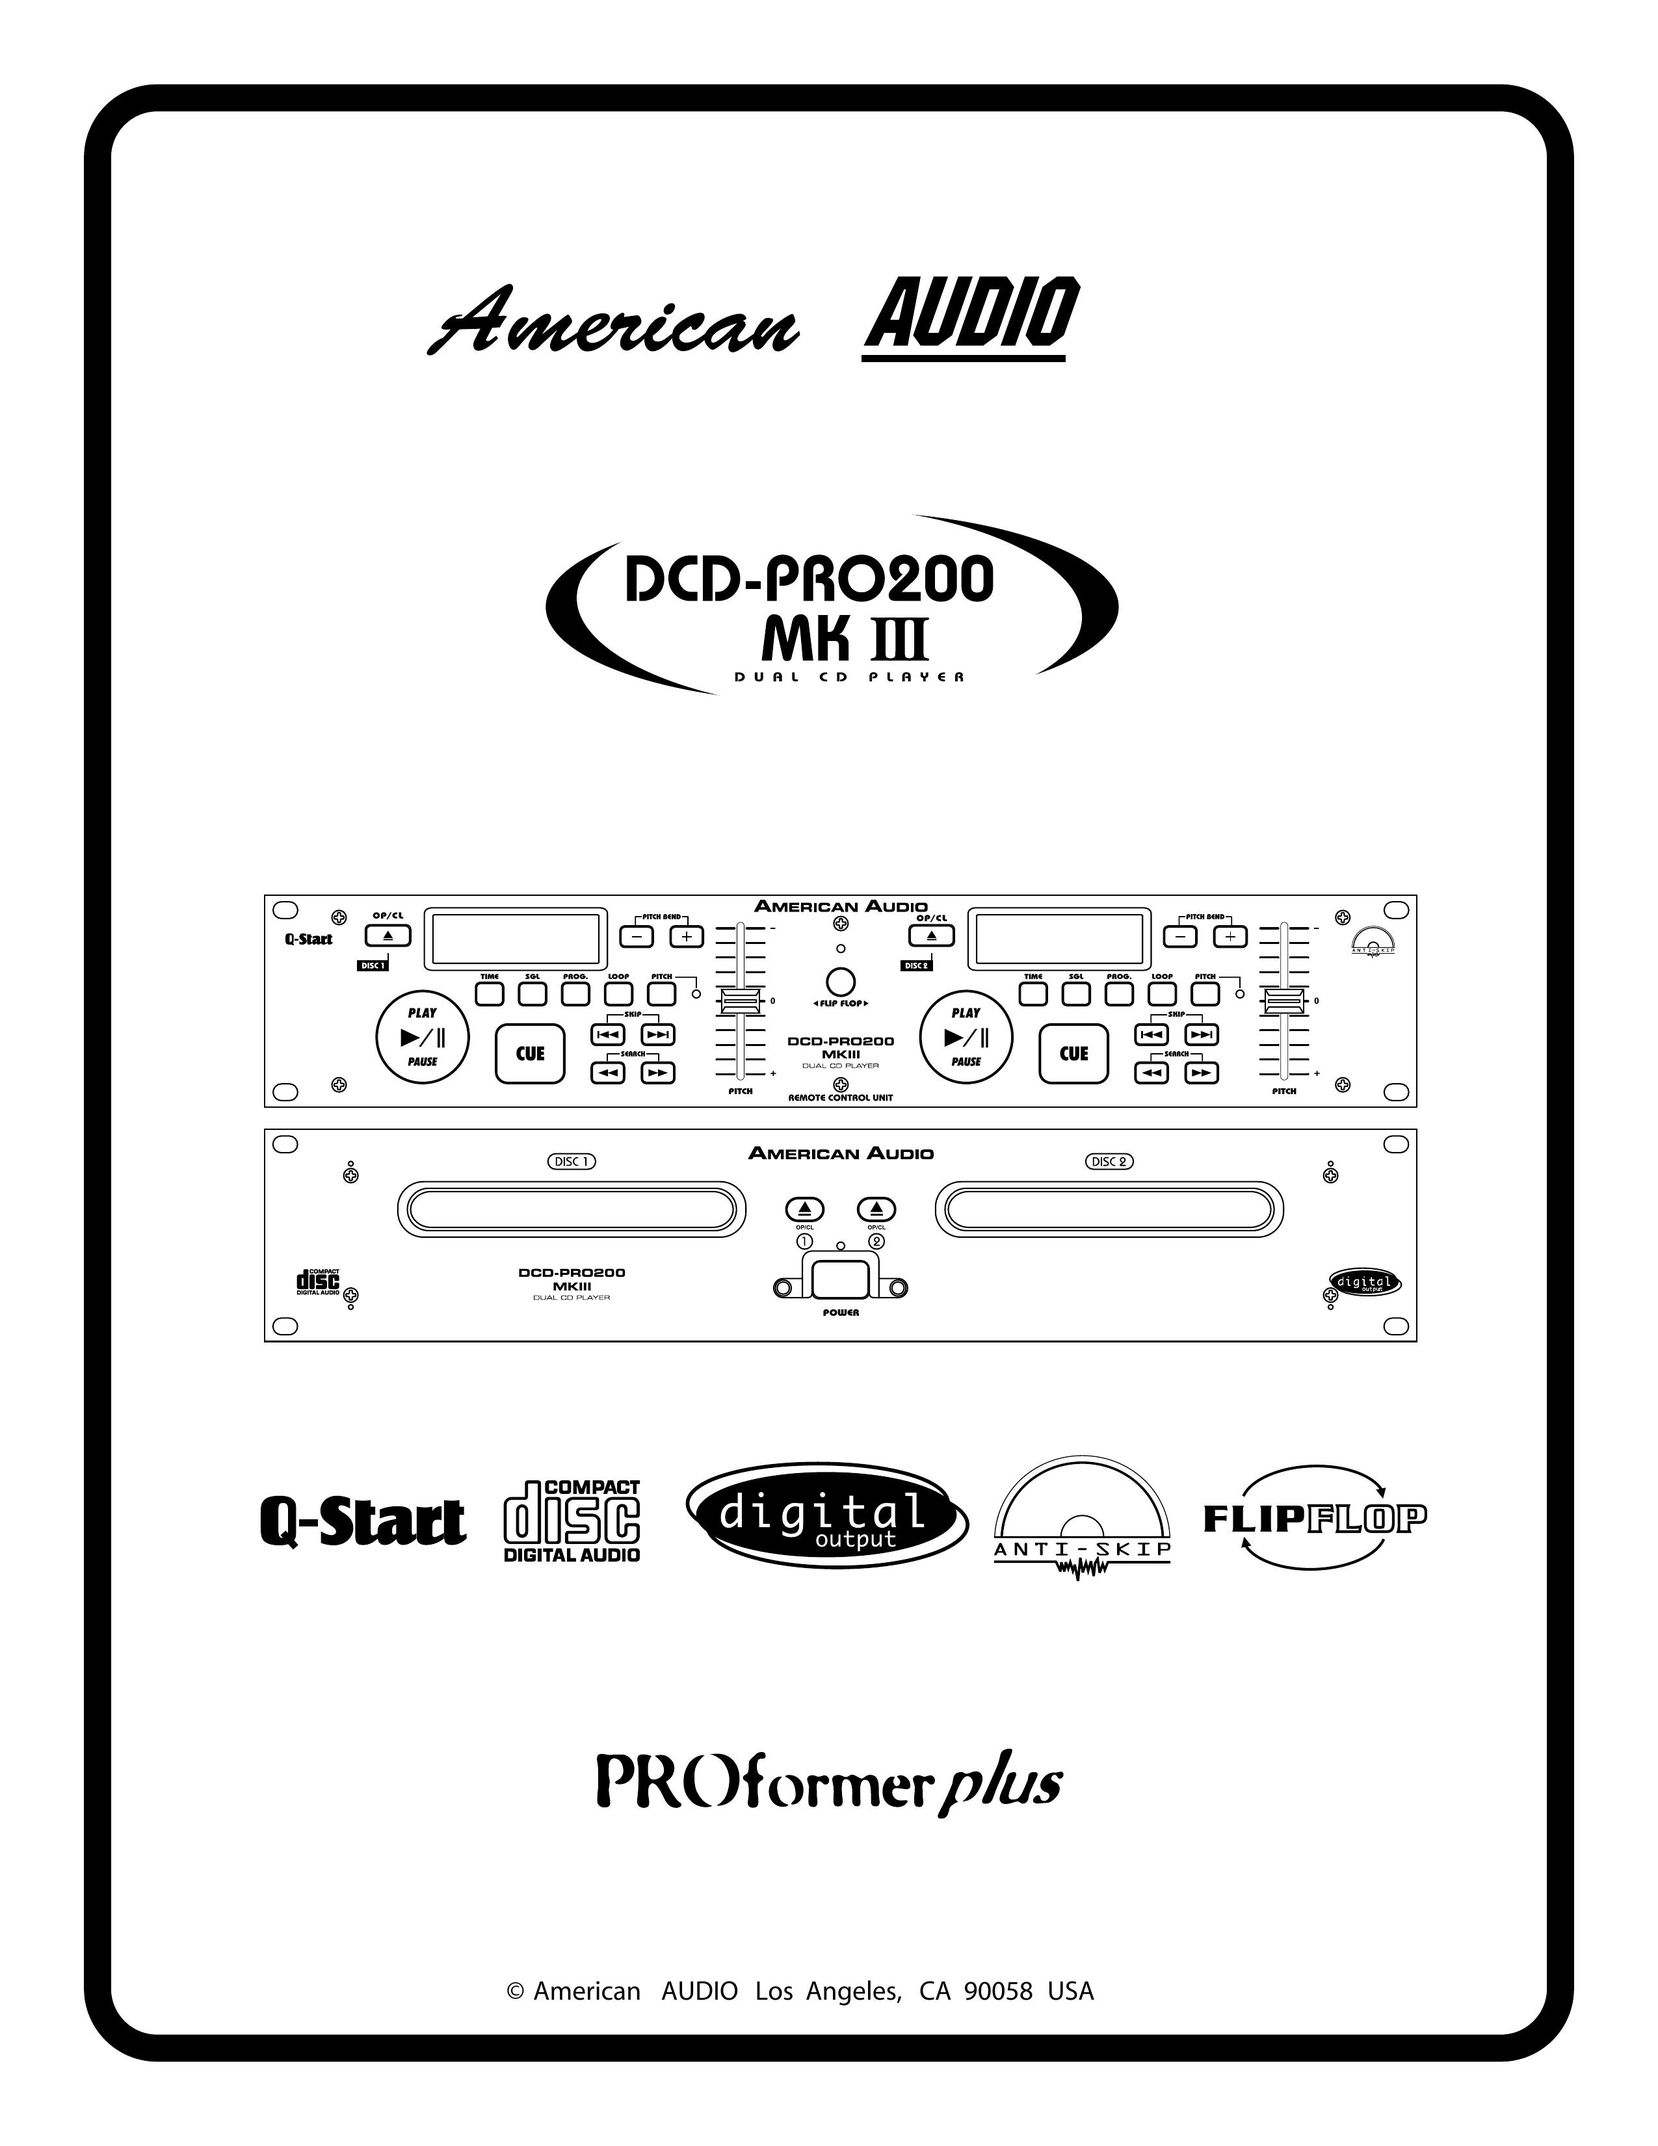 American Audio DCD-PRO200 CD Player User Manual